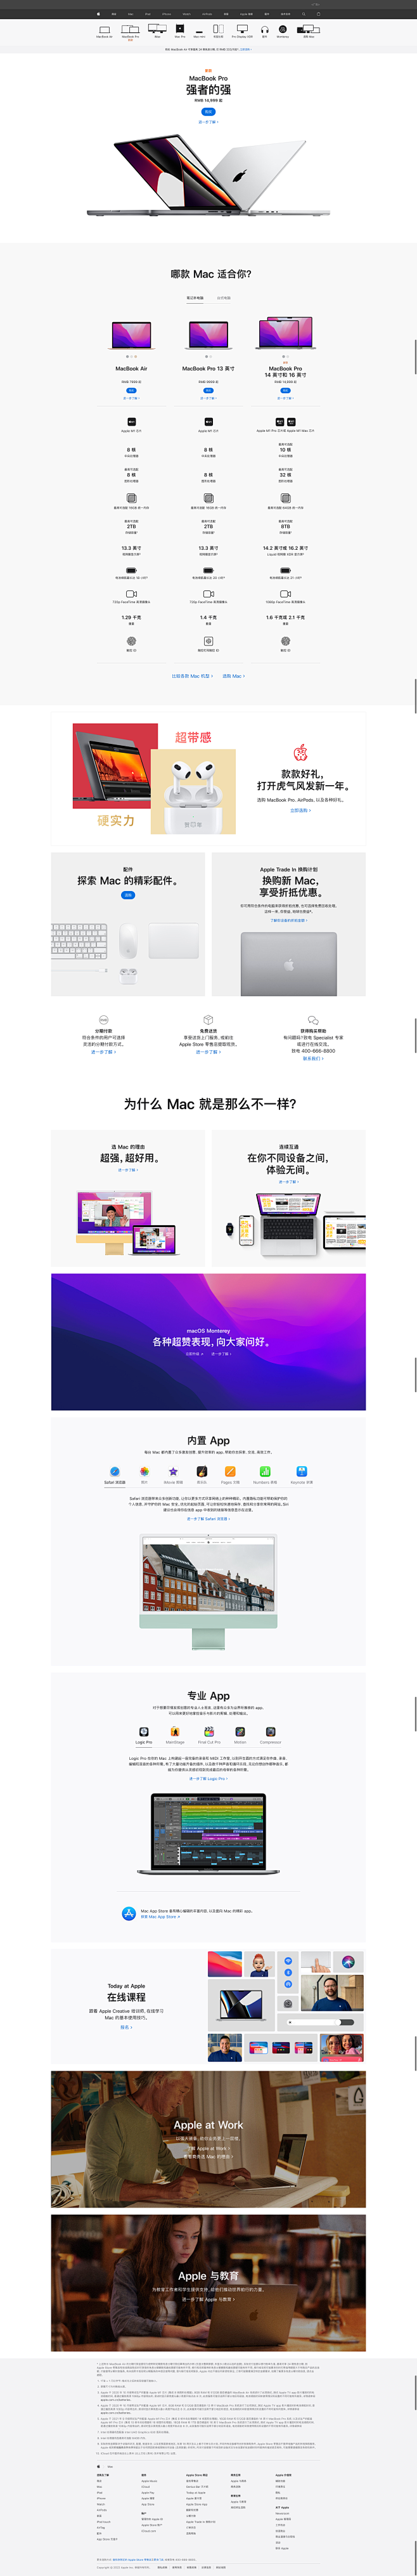 Mac - Apple (中国大陆)